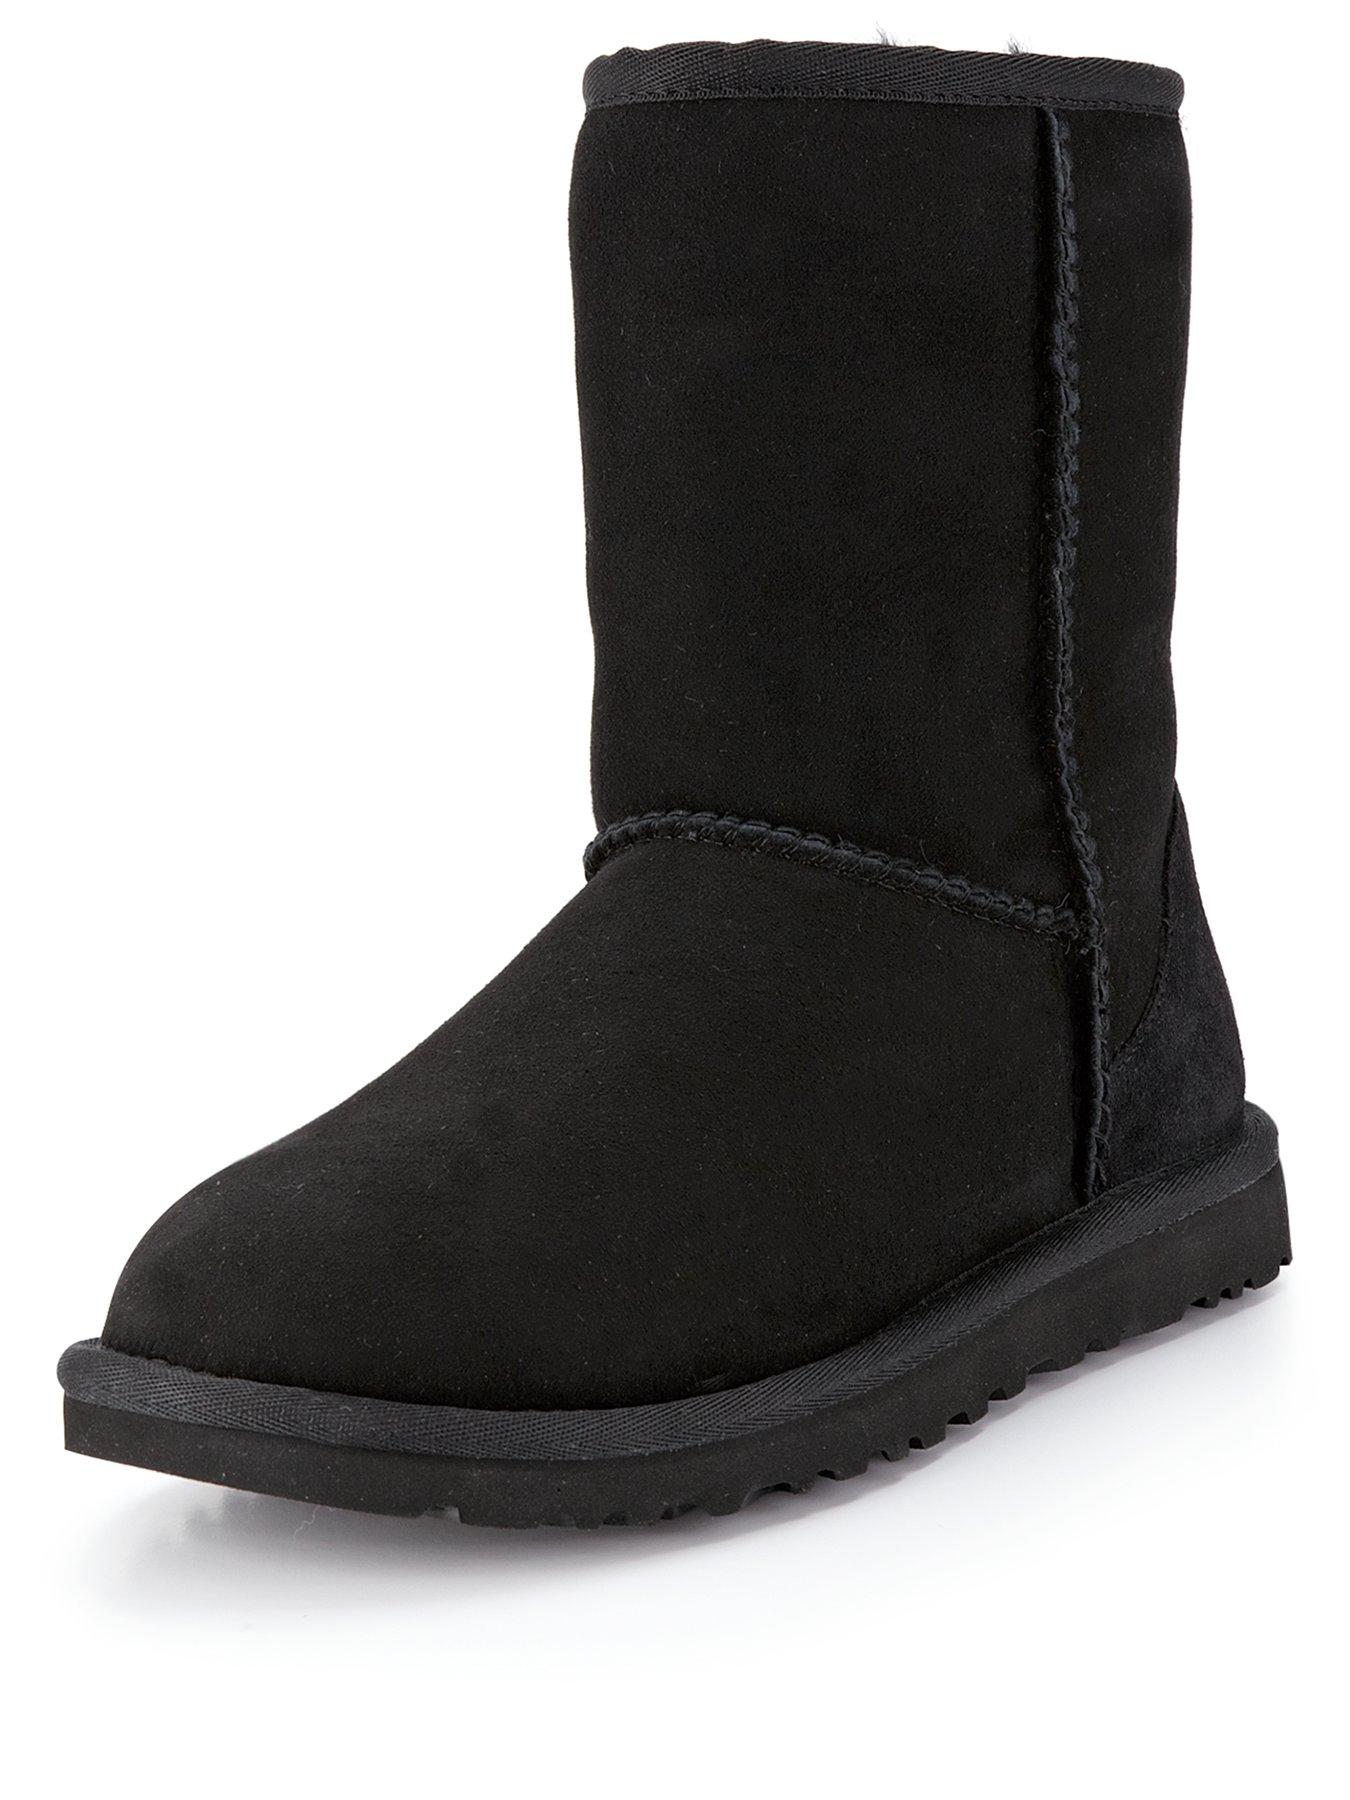 black ugg boots size 4